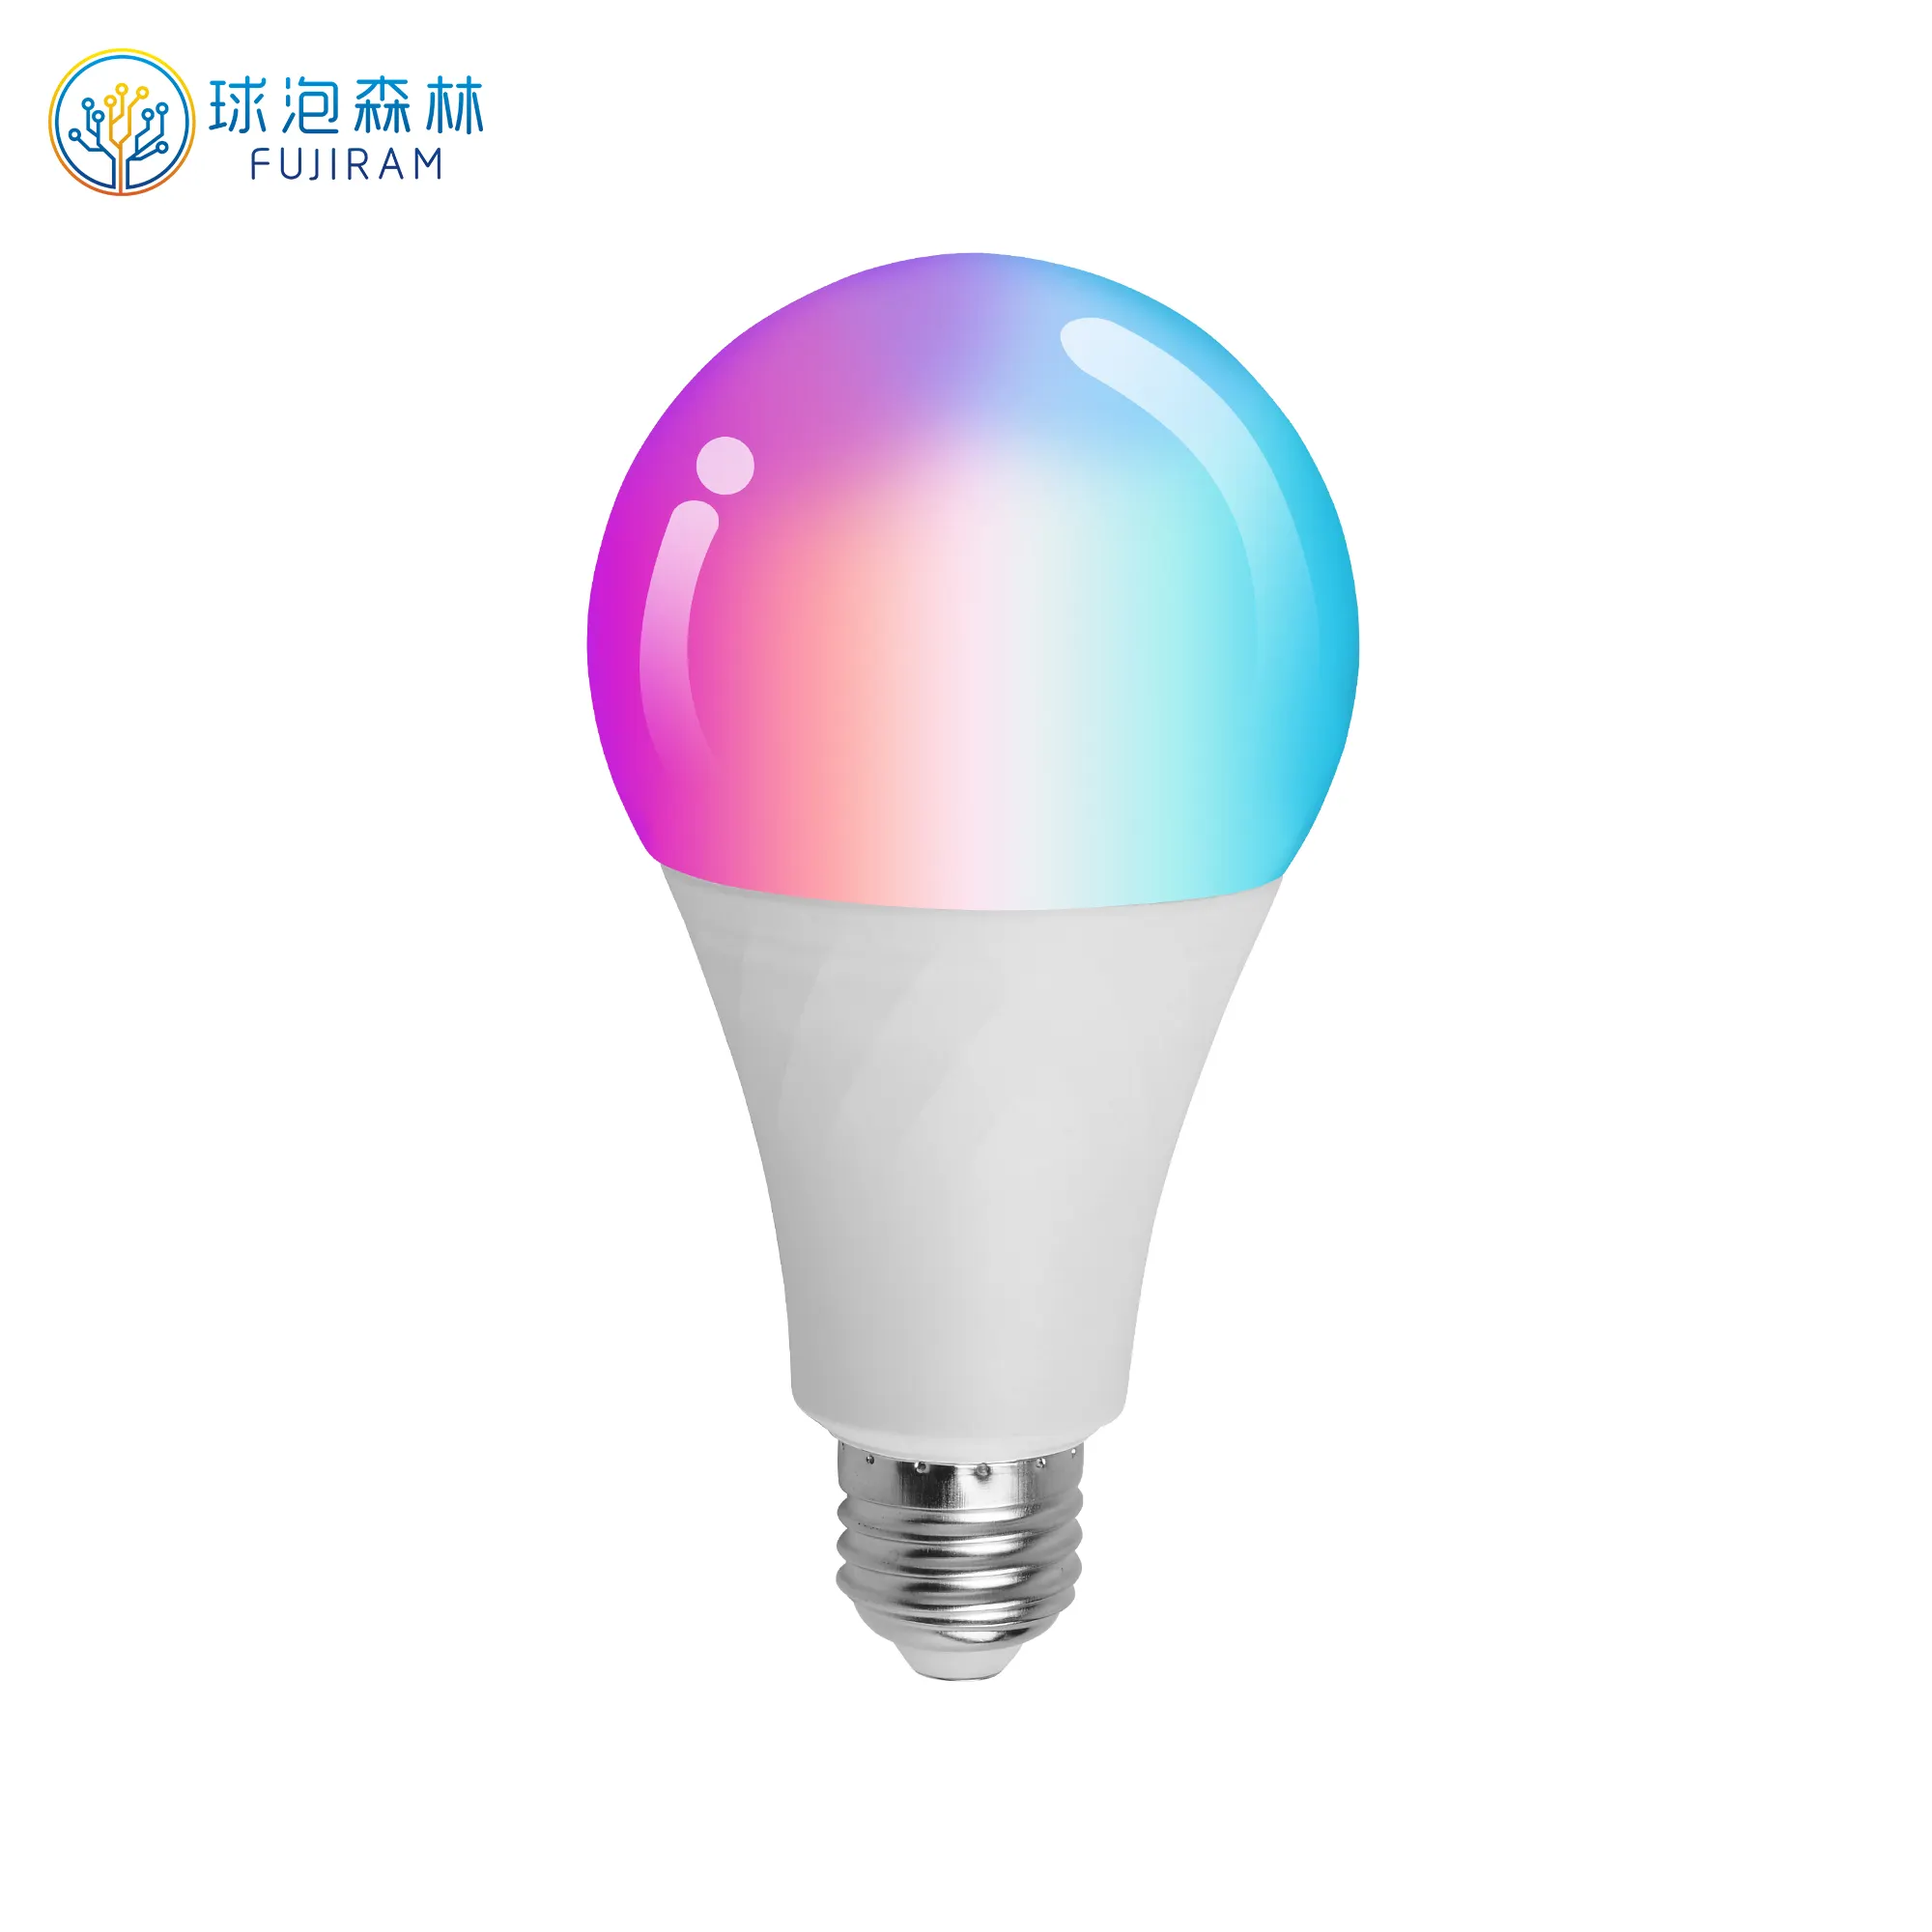 Fujiram lighting 9w led tuya RGB bulb light alexa remote control disco music wifi App smart bulb